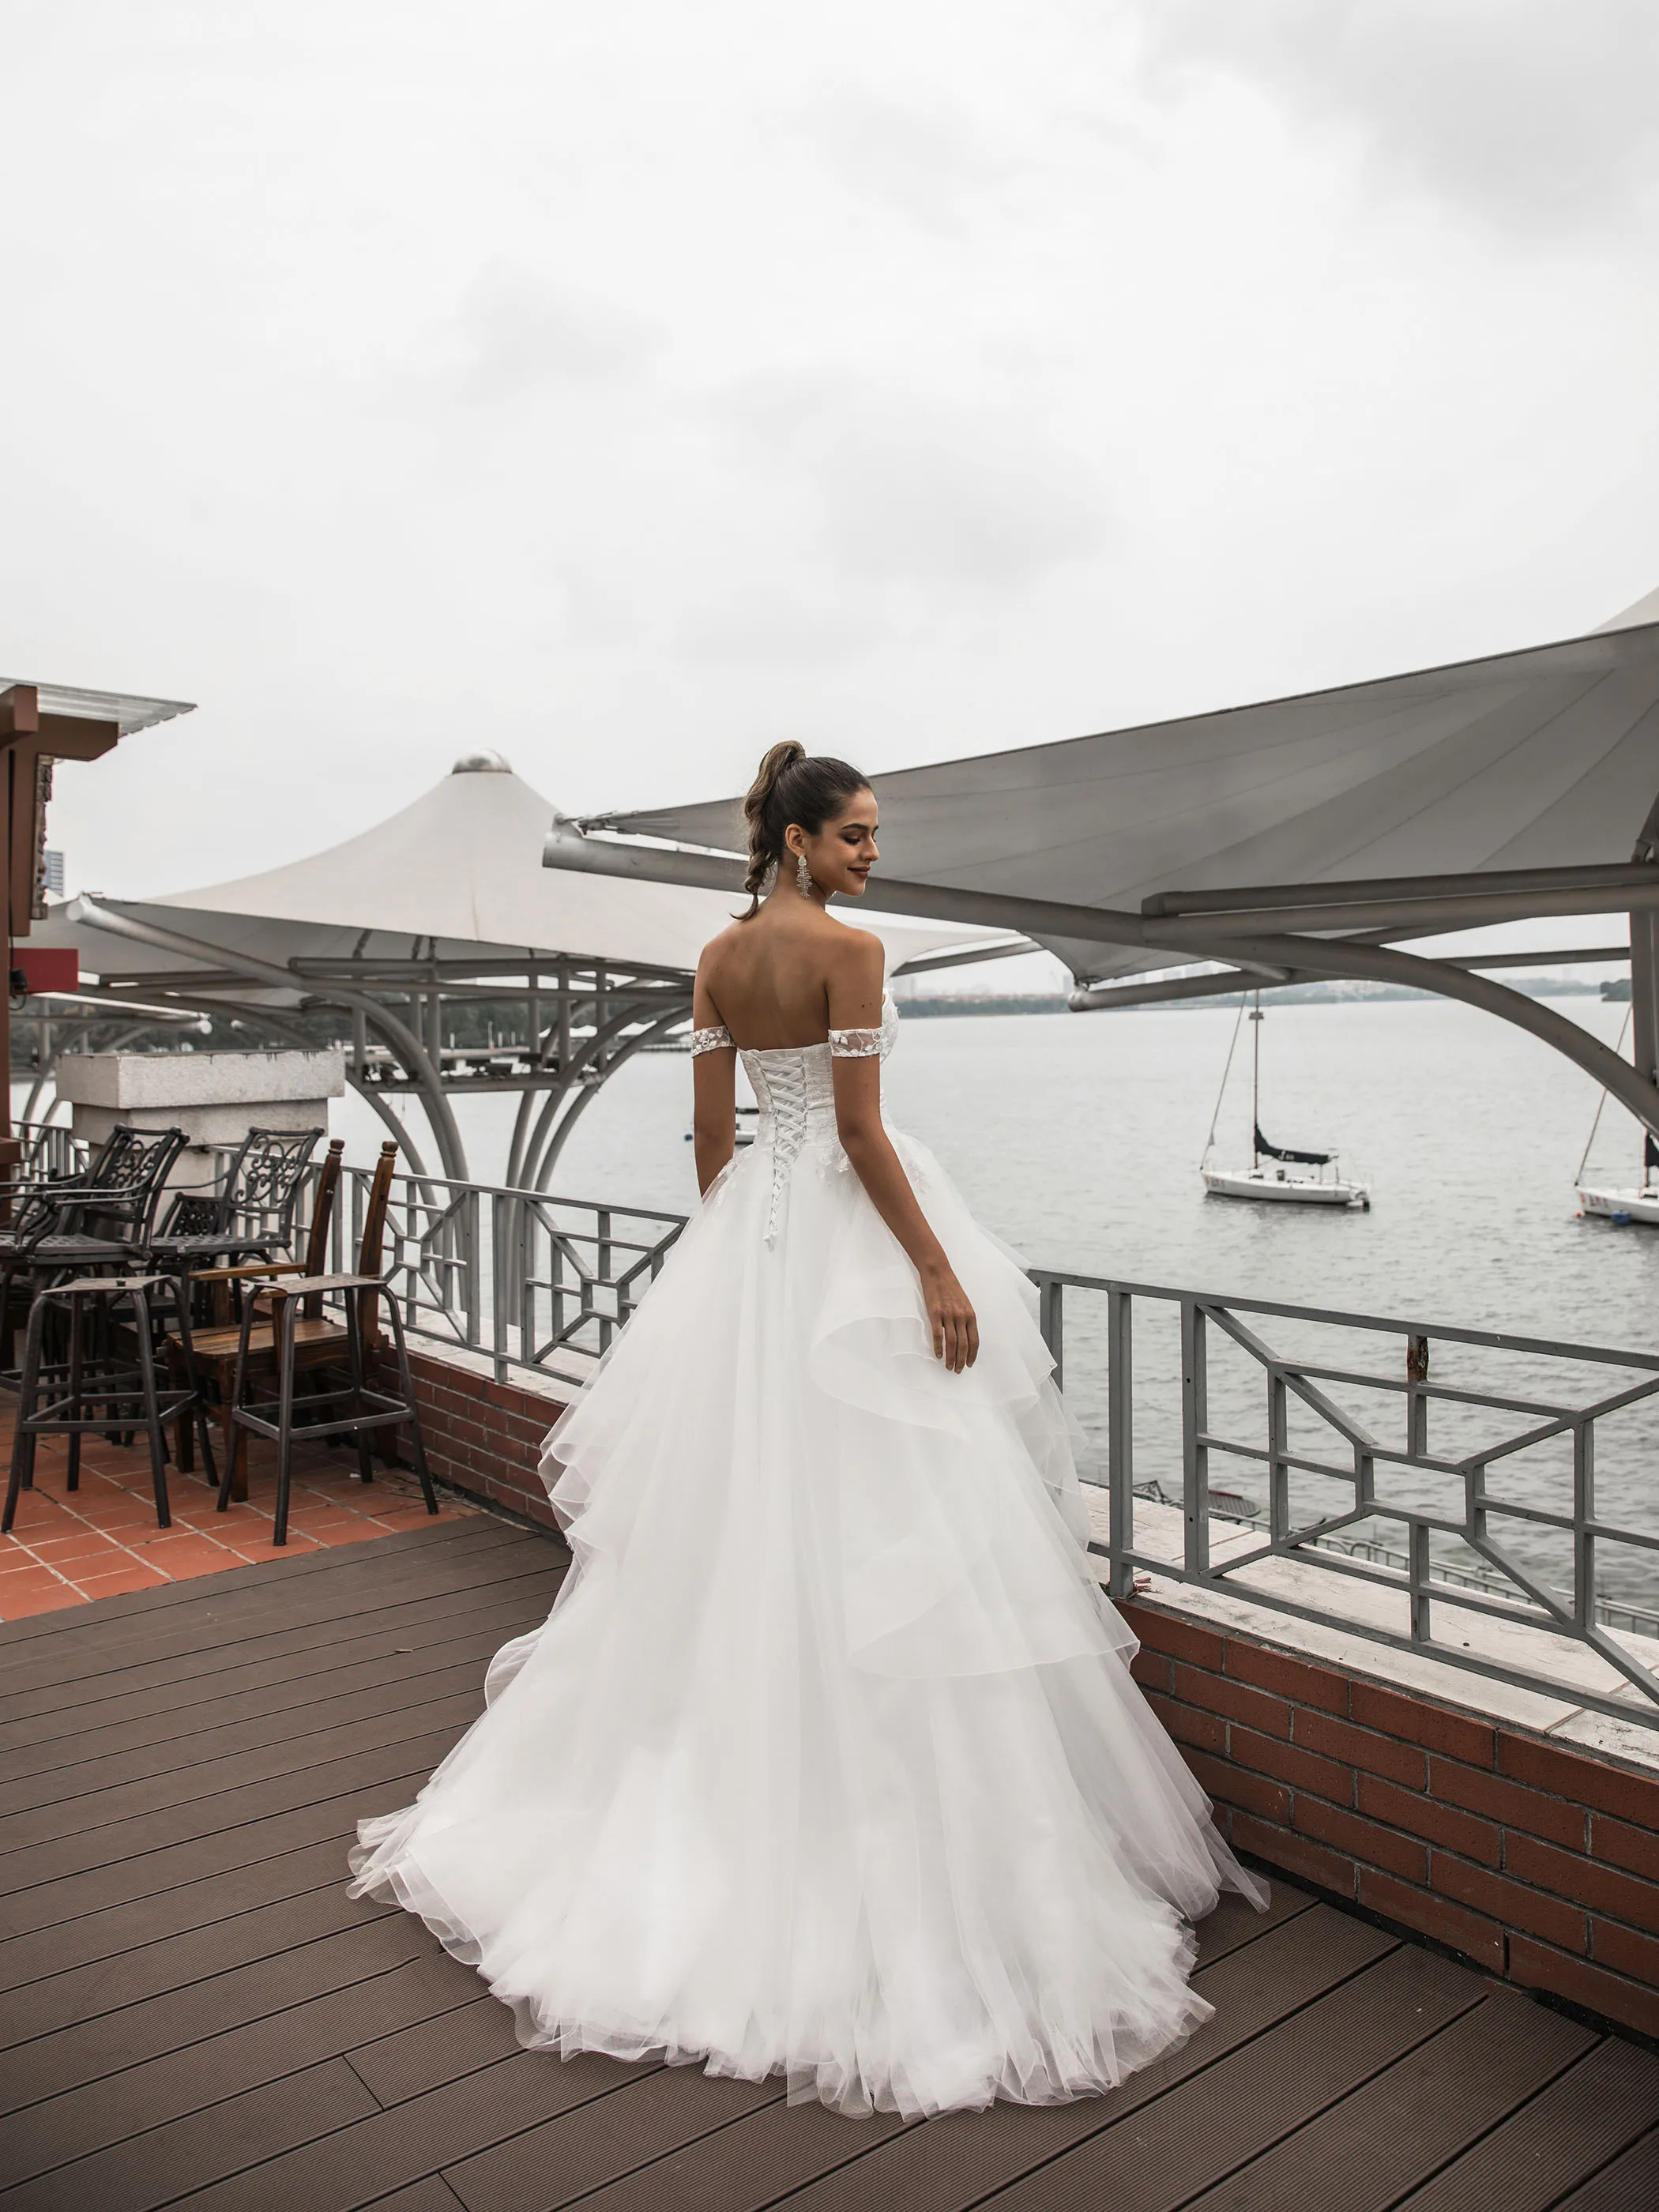 Tanpell Appliques Long Wedding Dress Elegant Ivory Off-The-Shoulder Sleeveless Floor-Length Church Ball Gown 2020 | Свадьбы и